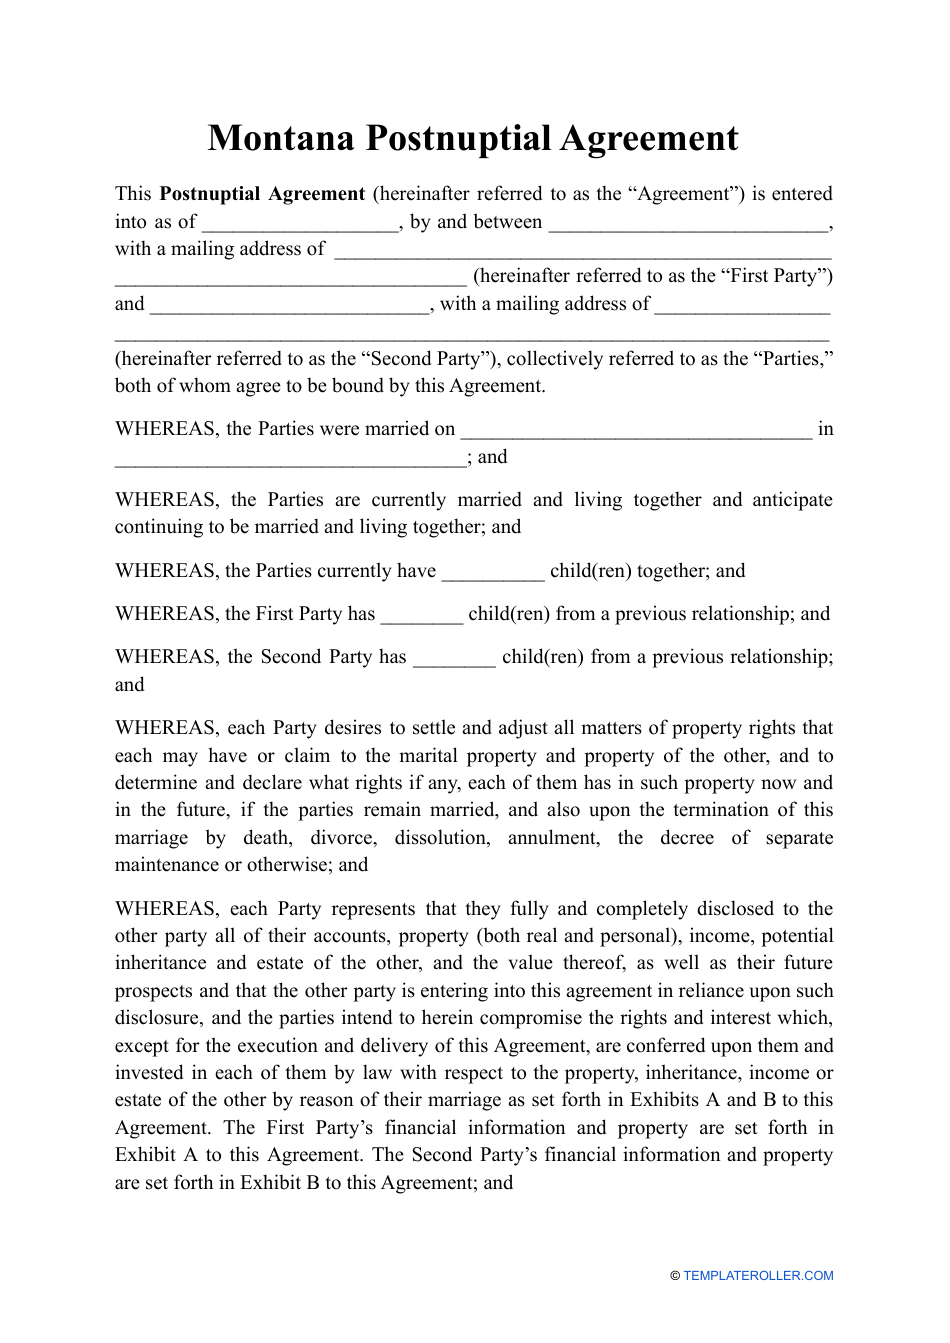 Montana Postnuptial Agreement Template Download Printable PDF